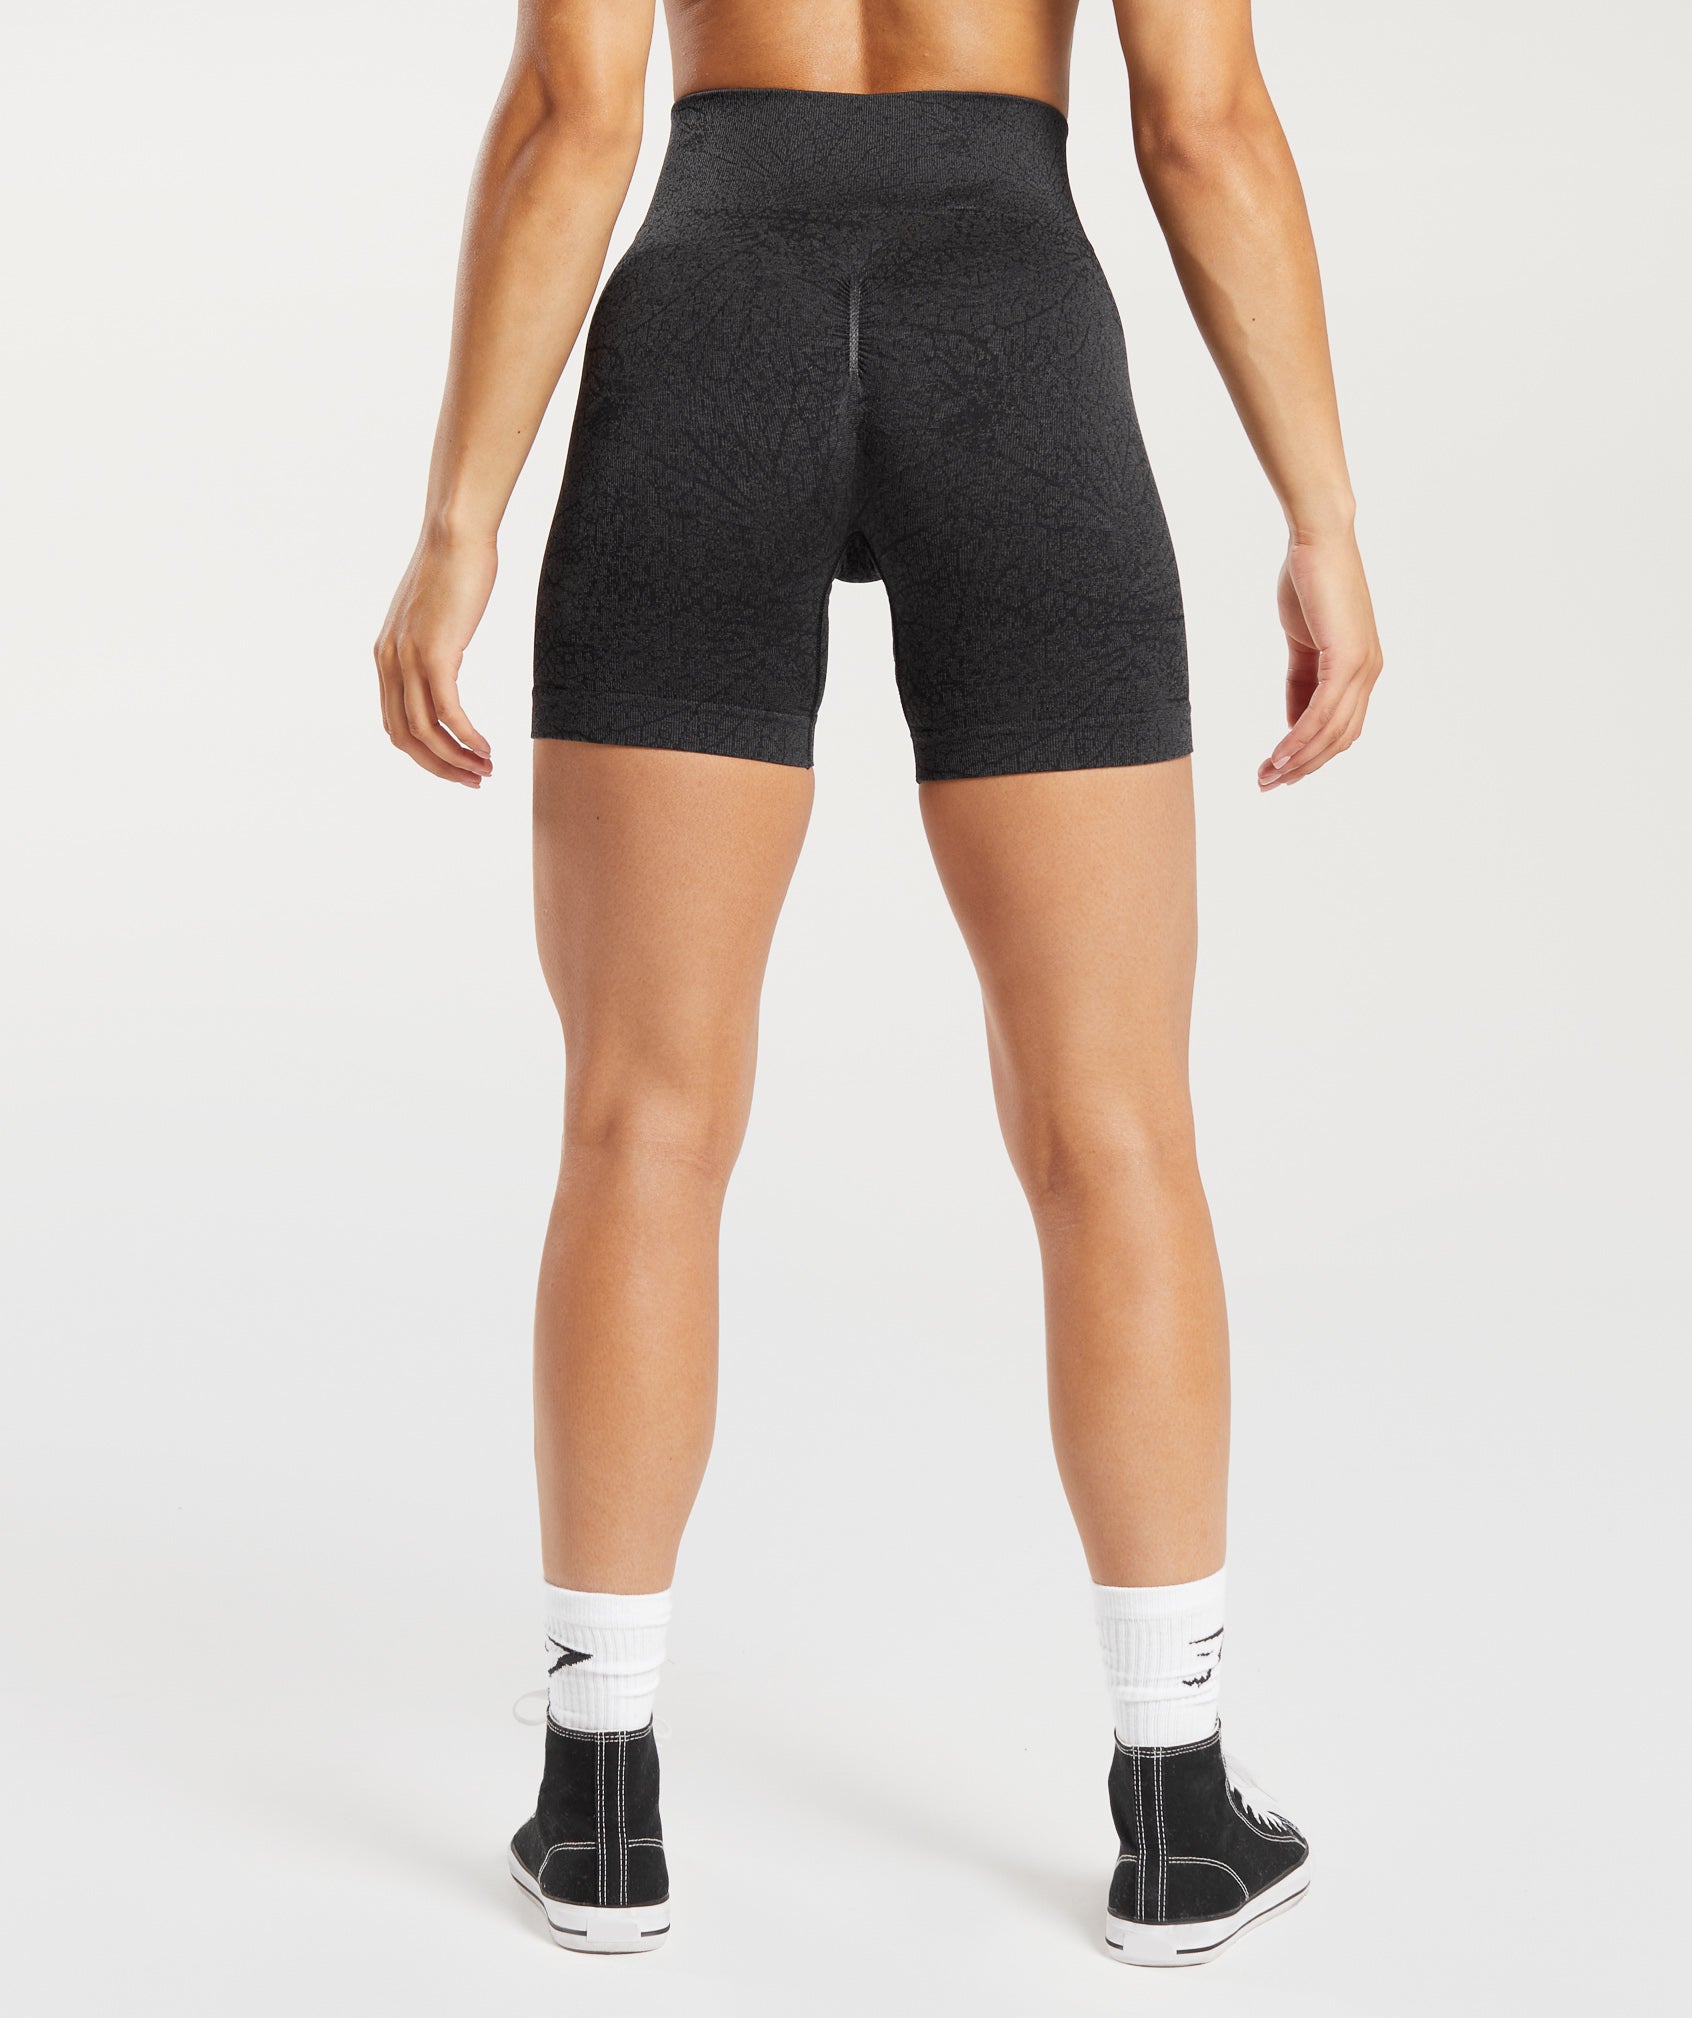 Adapt Pattern Seamless Shorts in Black/Graphite Grey - view 2